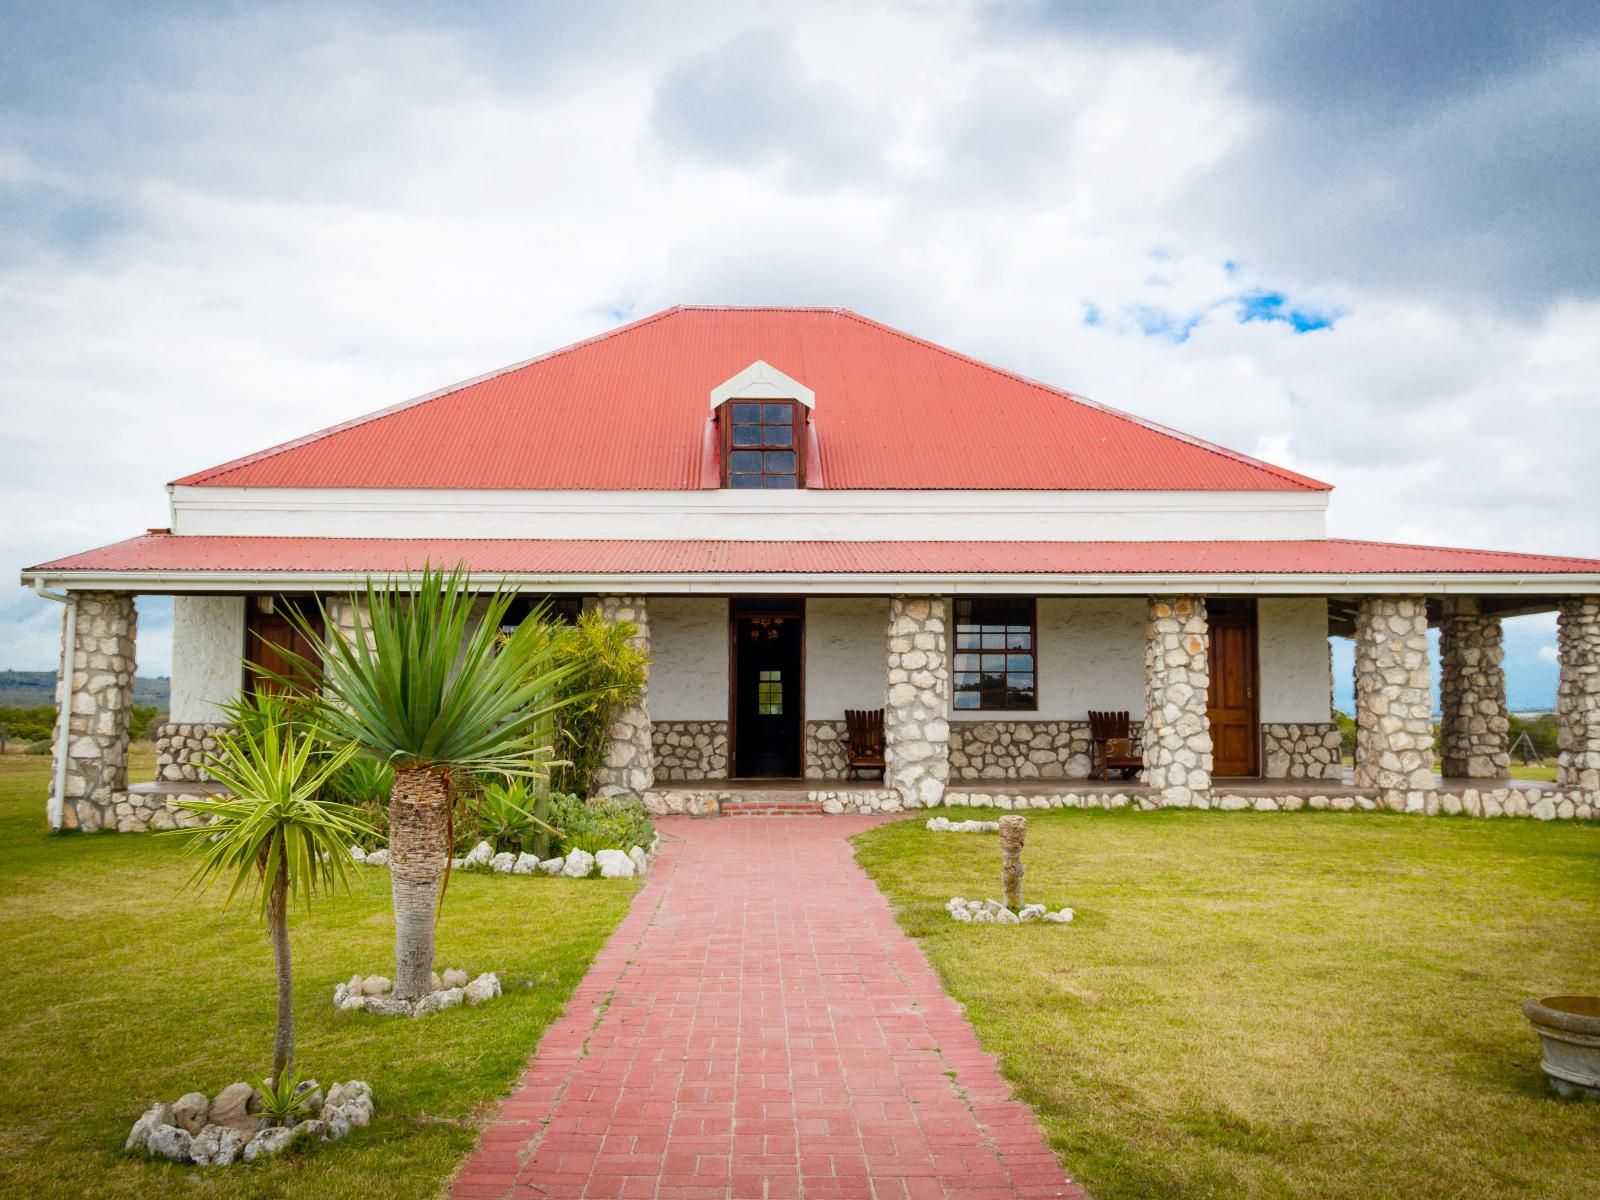 Thali Thali Game Lodge Olifantskop Langebaan Western Cape South Africa House, Building, Architecture